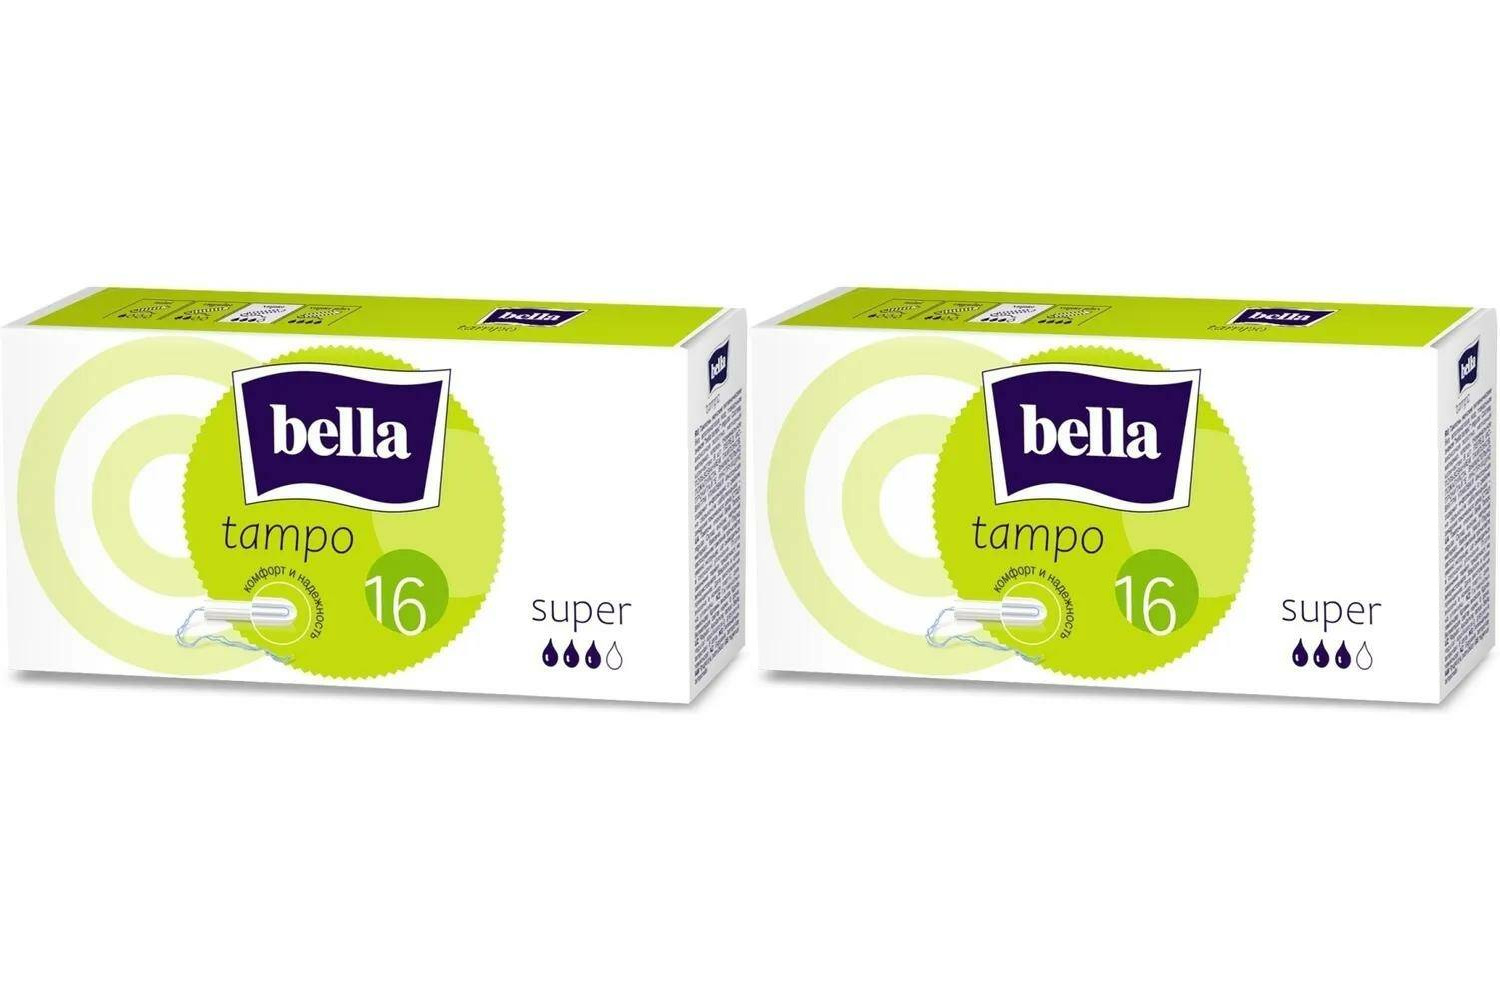 Тампоны Bella tampo Super premium comfort 2 уп х 16 шт bella премиум комфорт тампоны супер 16 шт